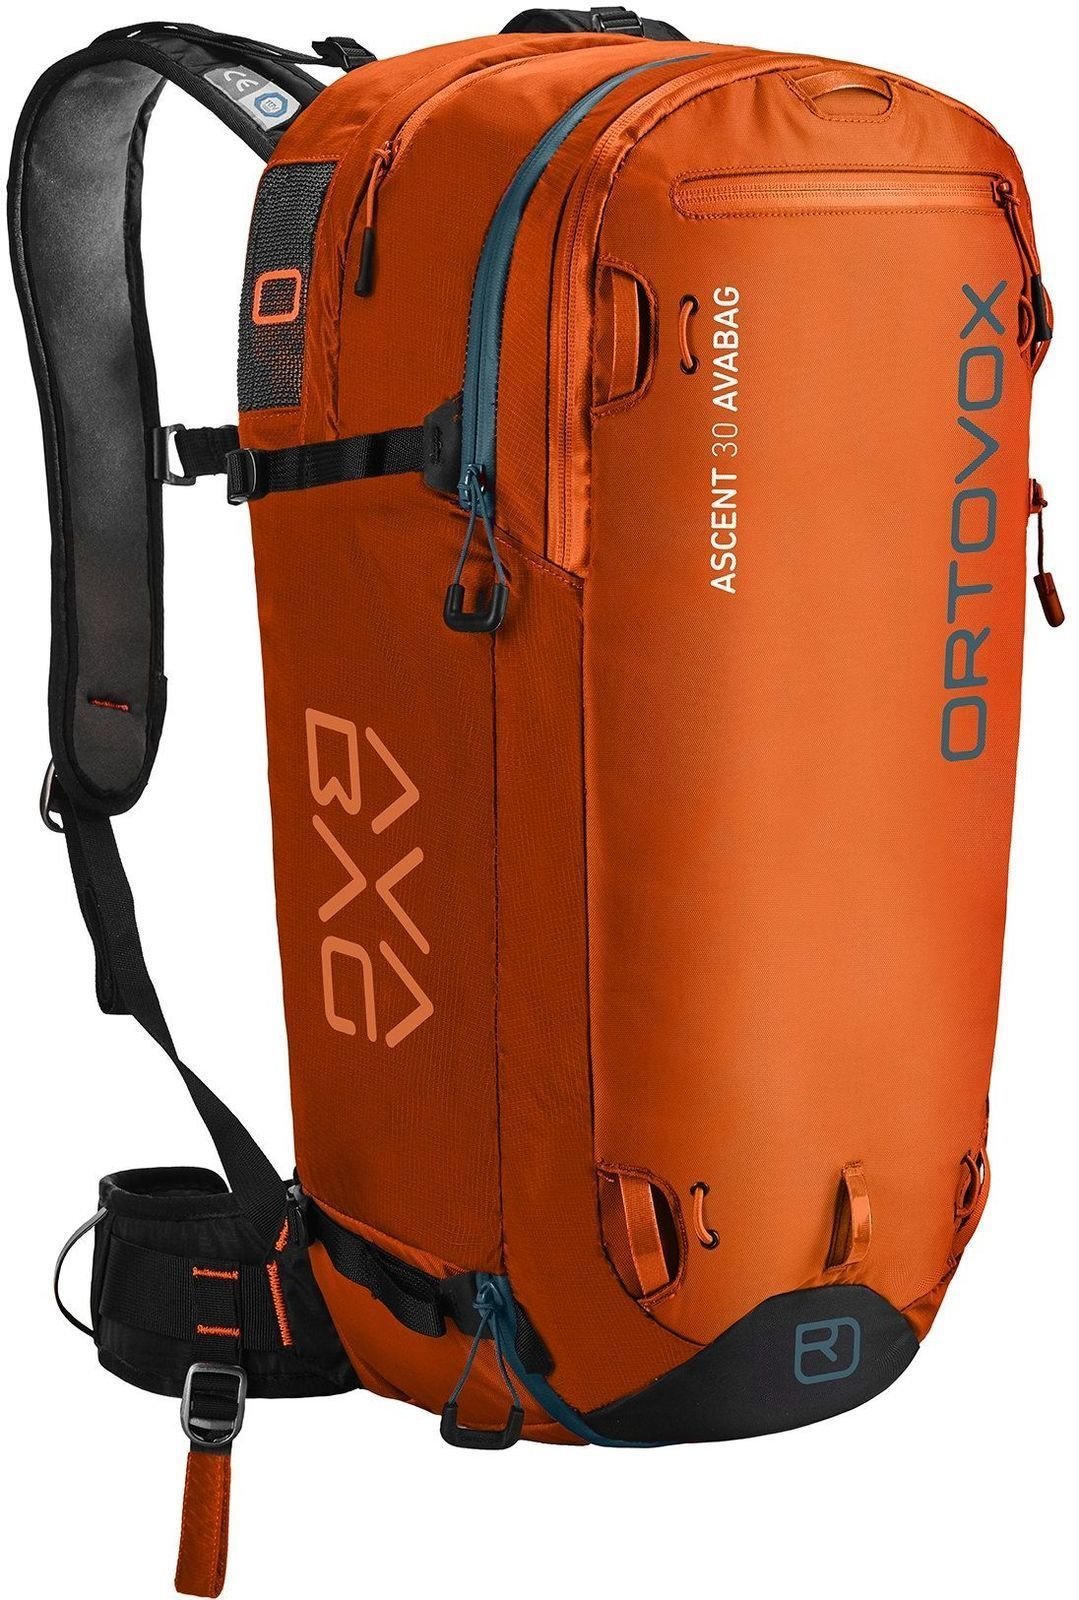 Ski Travel Bag Ortovox Ascent 30 Avabag Kit Crazy Orange Ski Travel Bag